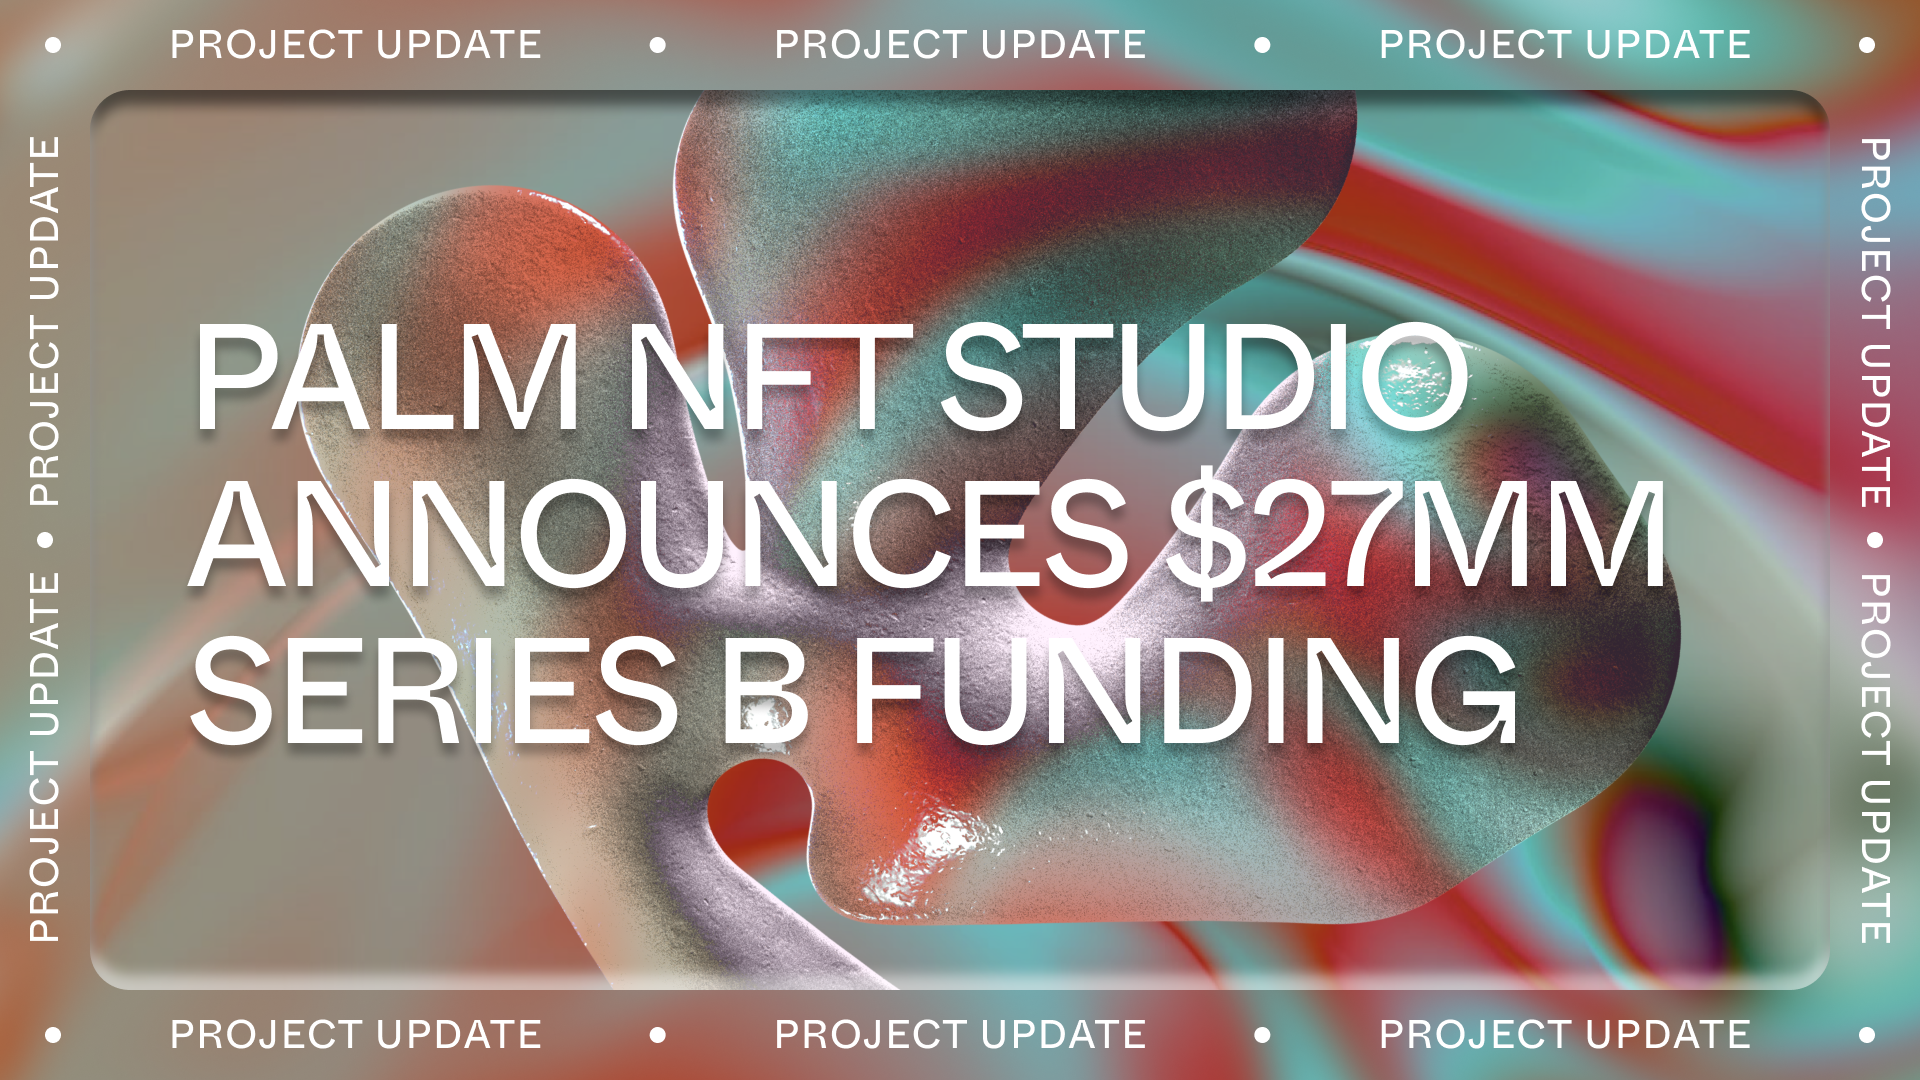 Palm NFT Studio Announces $27M Series B Funding.